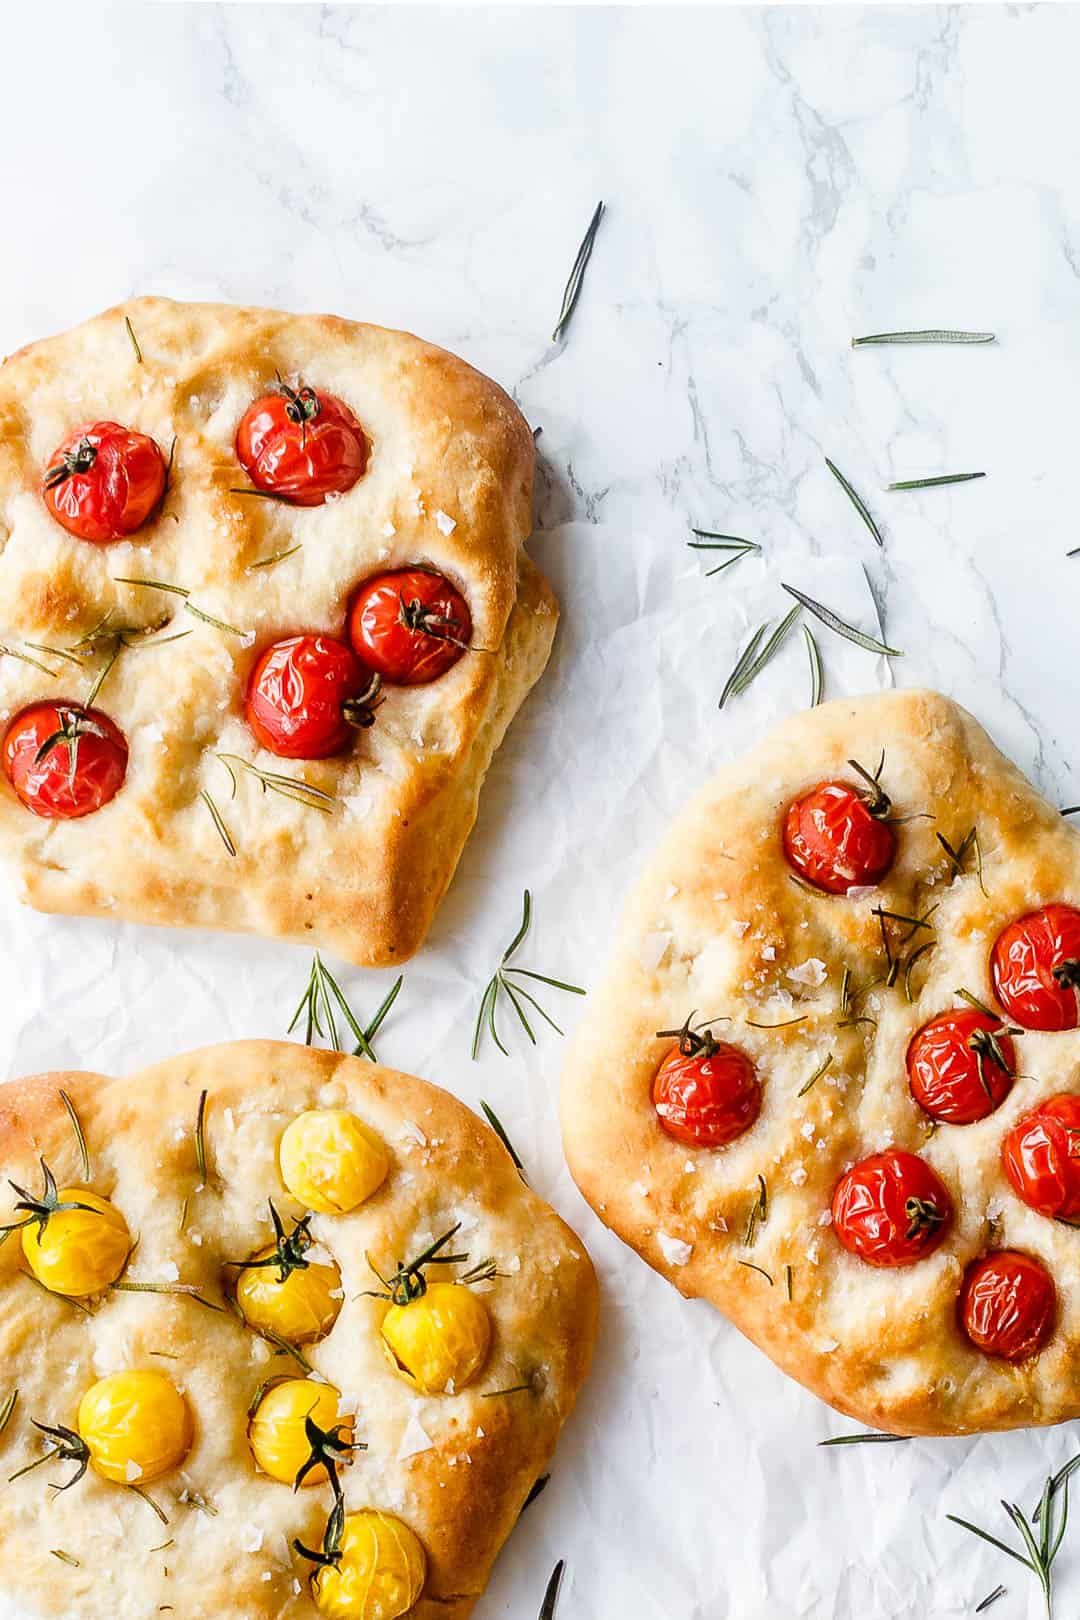 Foccacia brød med tomat og rosmarin - opskrift på italiensk madbrød